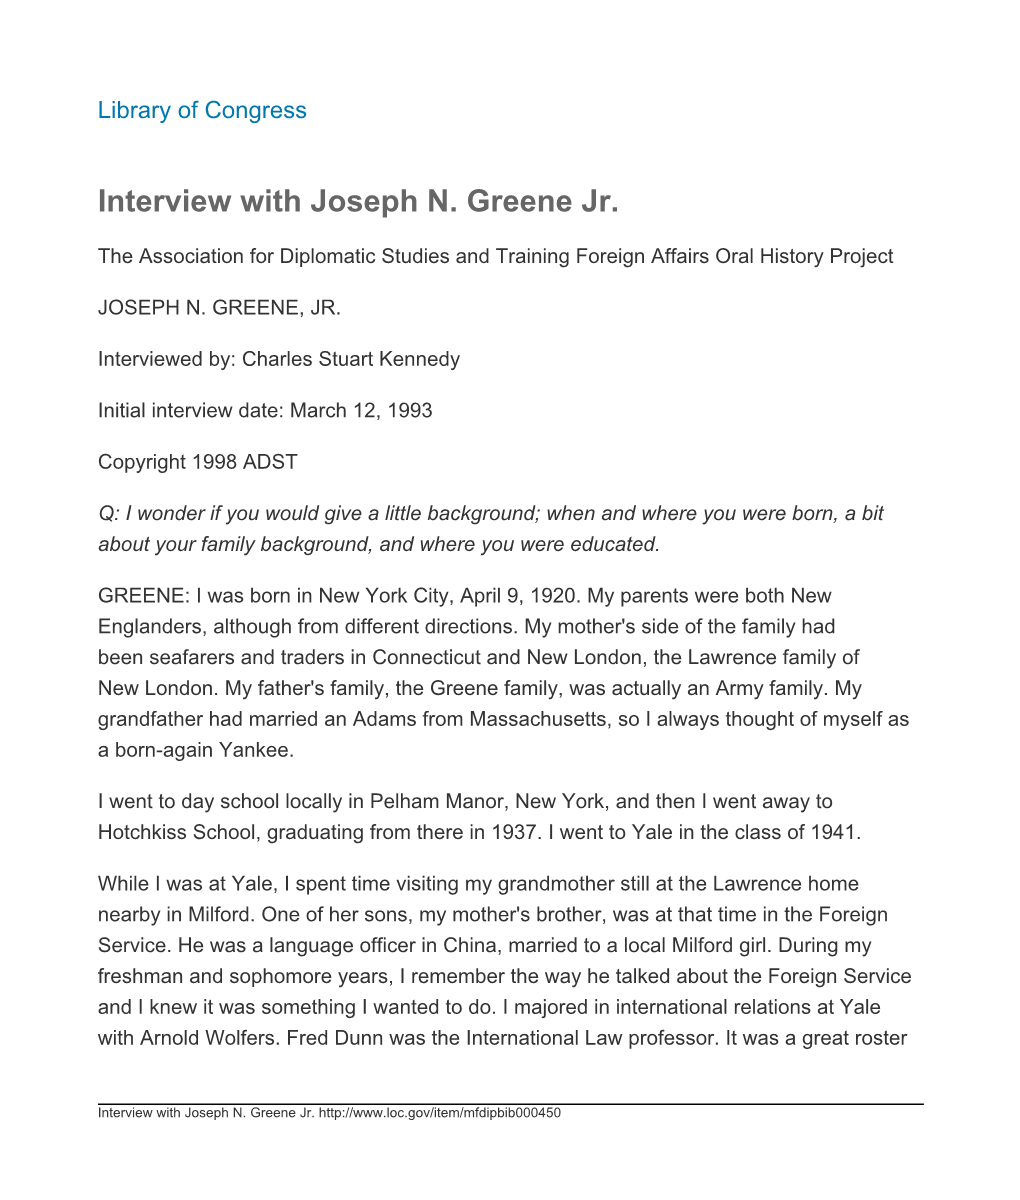 Interview with Joseph N. Greene Jr